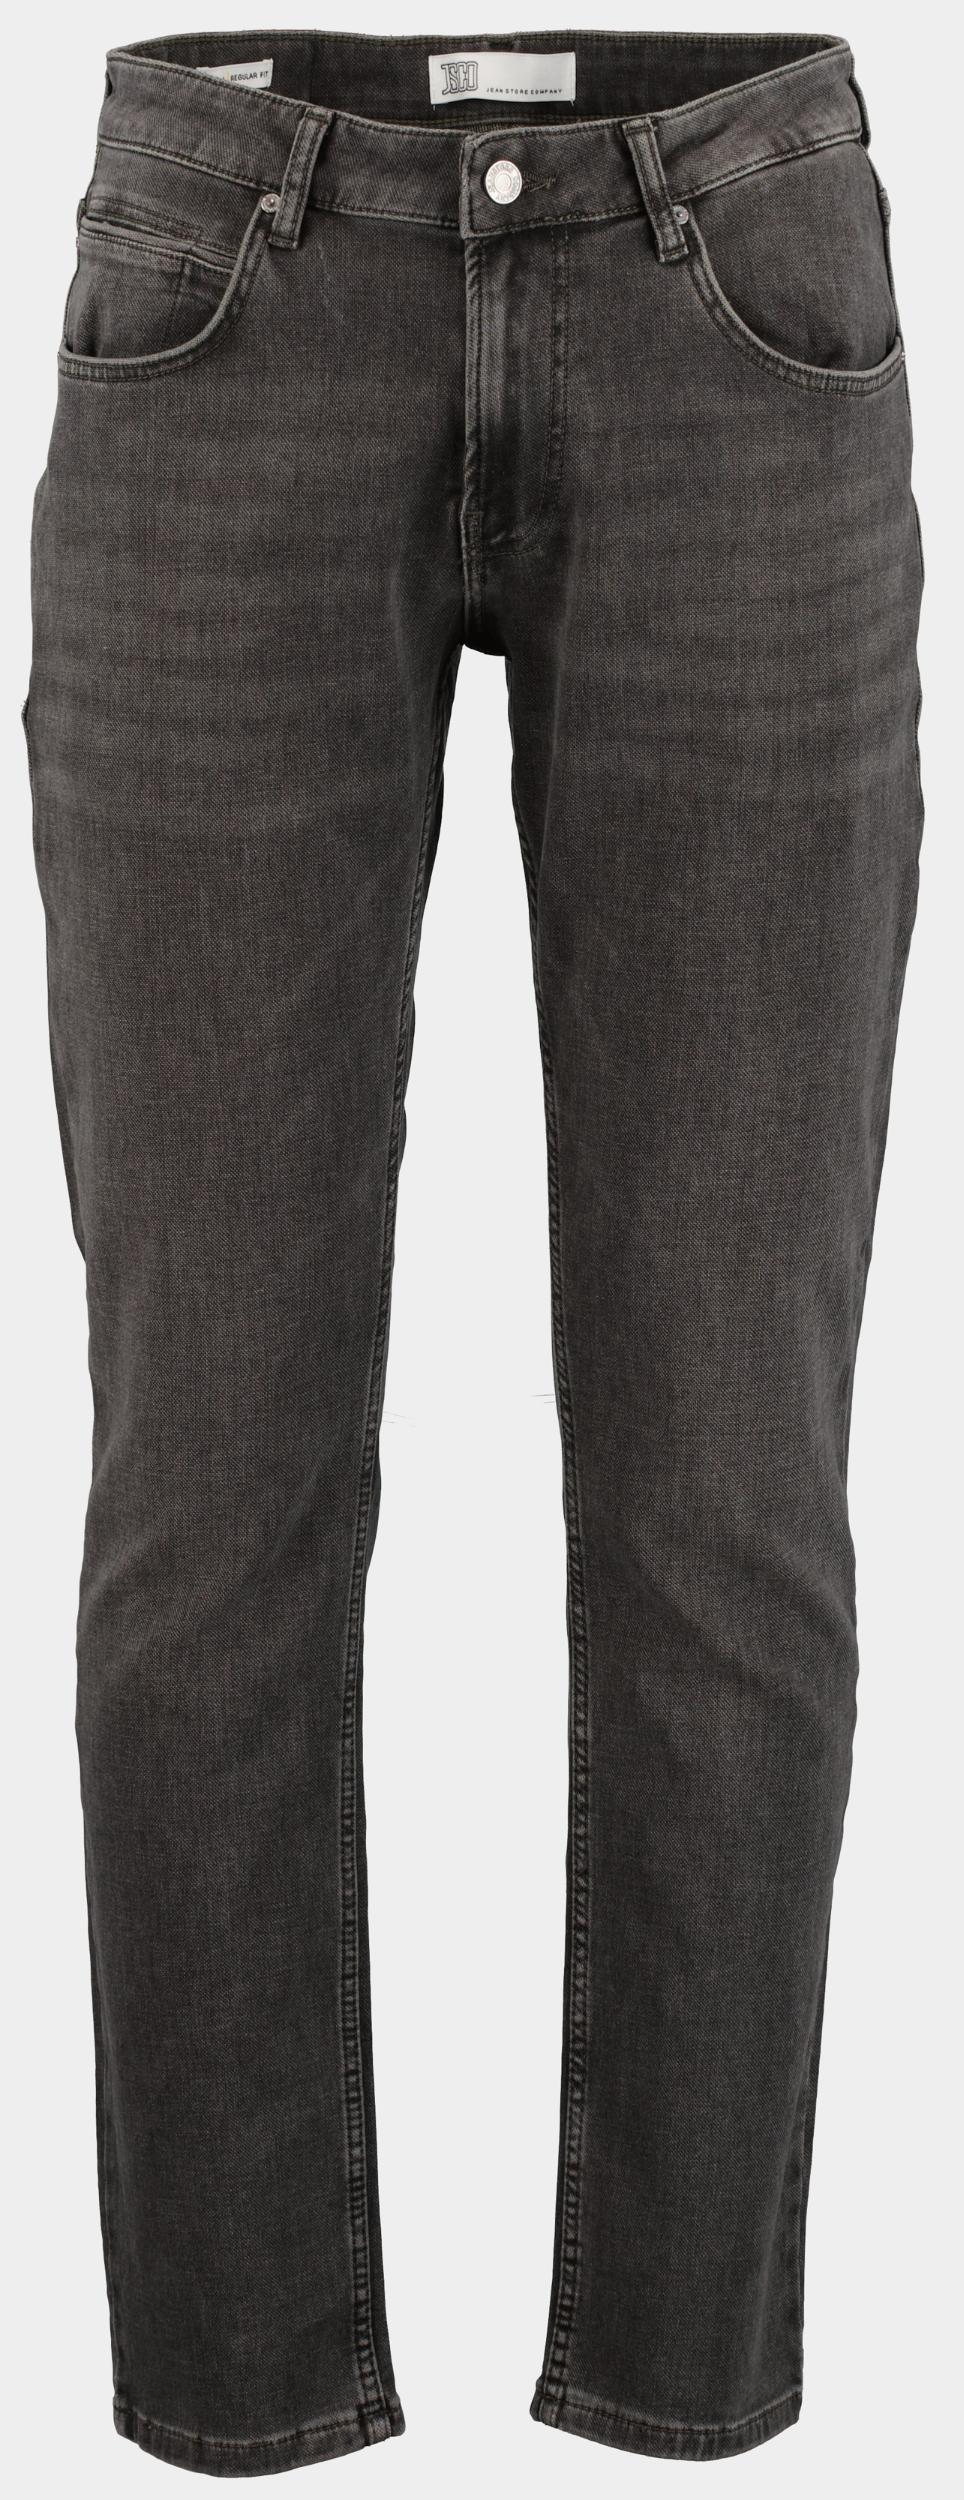 Jean Store Company 5-Pocket Jeans Zwart  2210-JR74-Parma/Black Haki